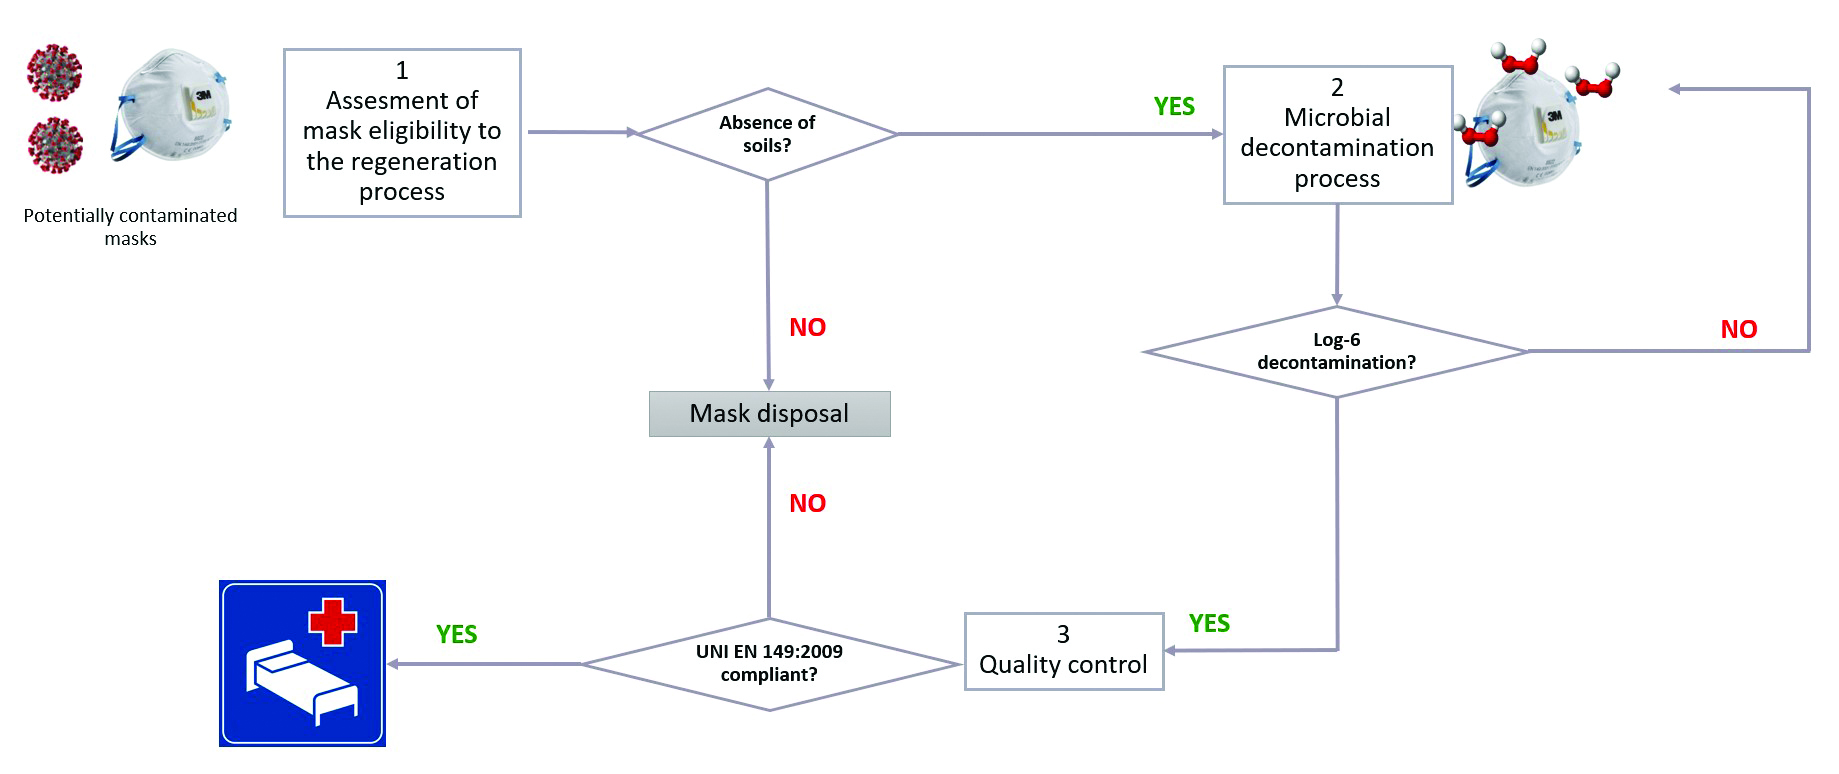 Figure 1: A generic operative process flow for Filtering FacePiece (FFP) mask regeneration